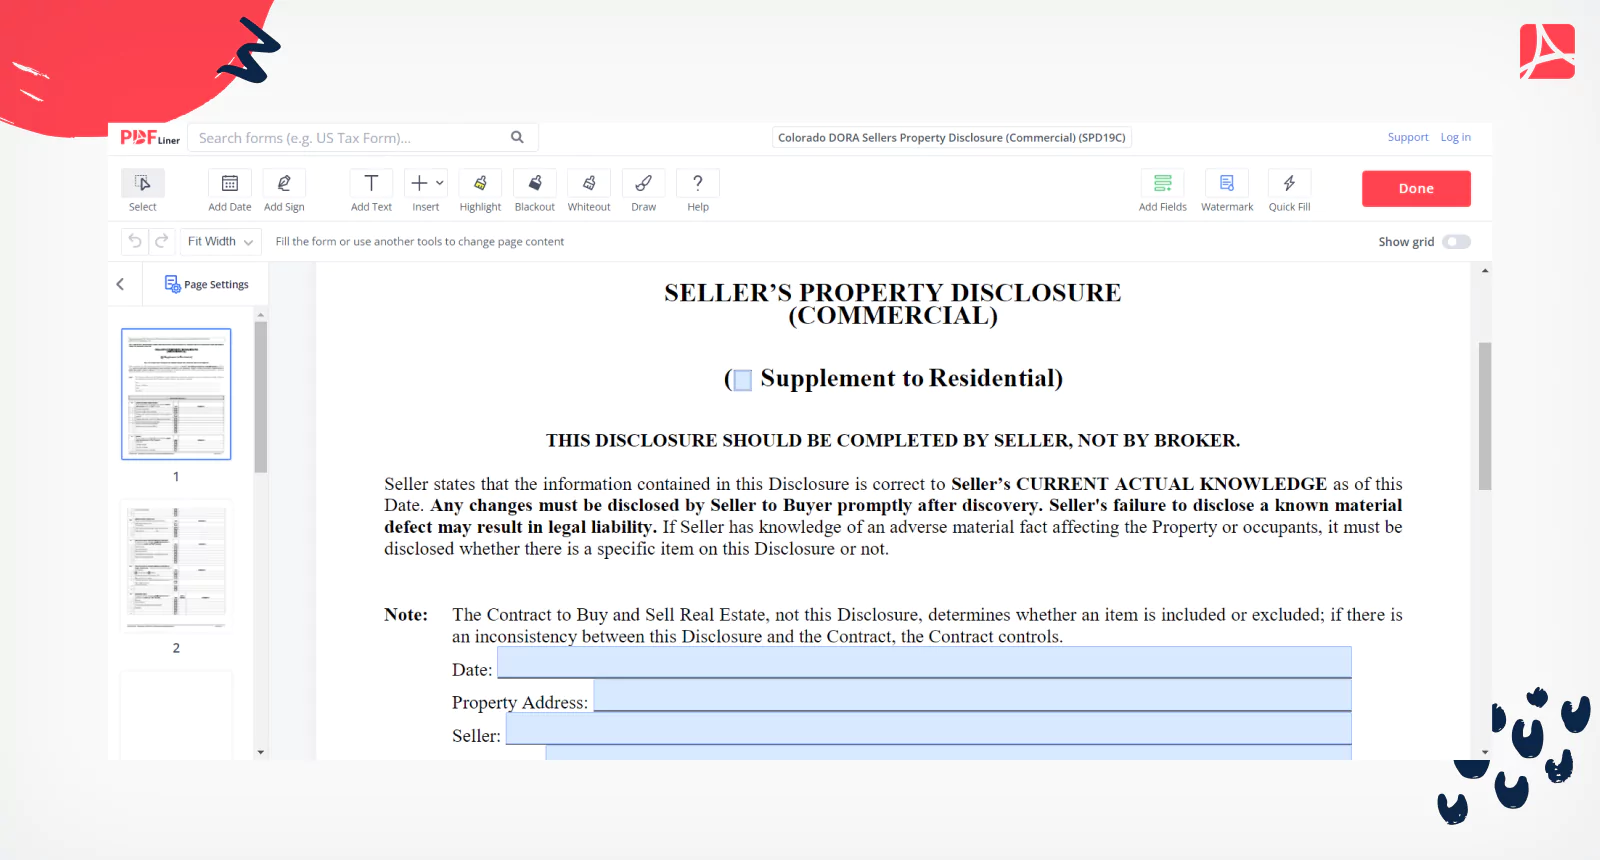 Colorado DORA Sellers Property Disclosure (Commercial) (SPD19C) on PDFLiner